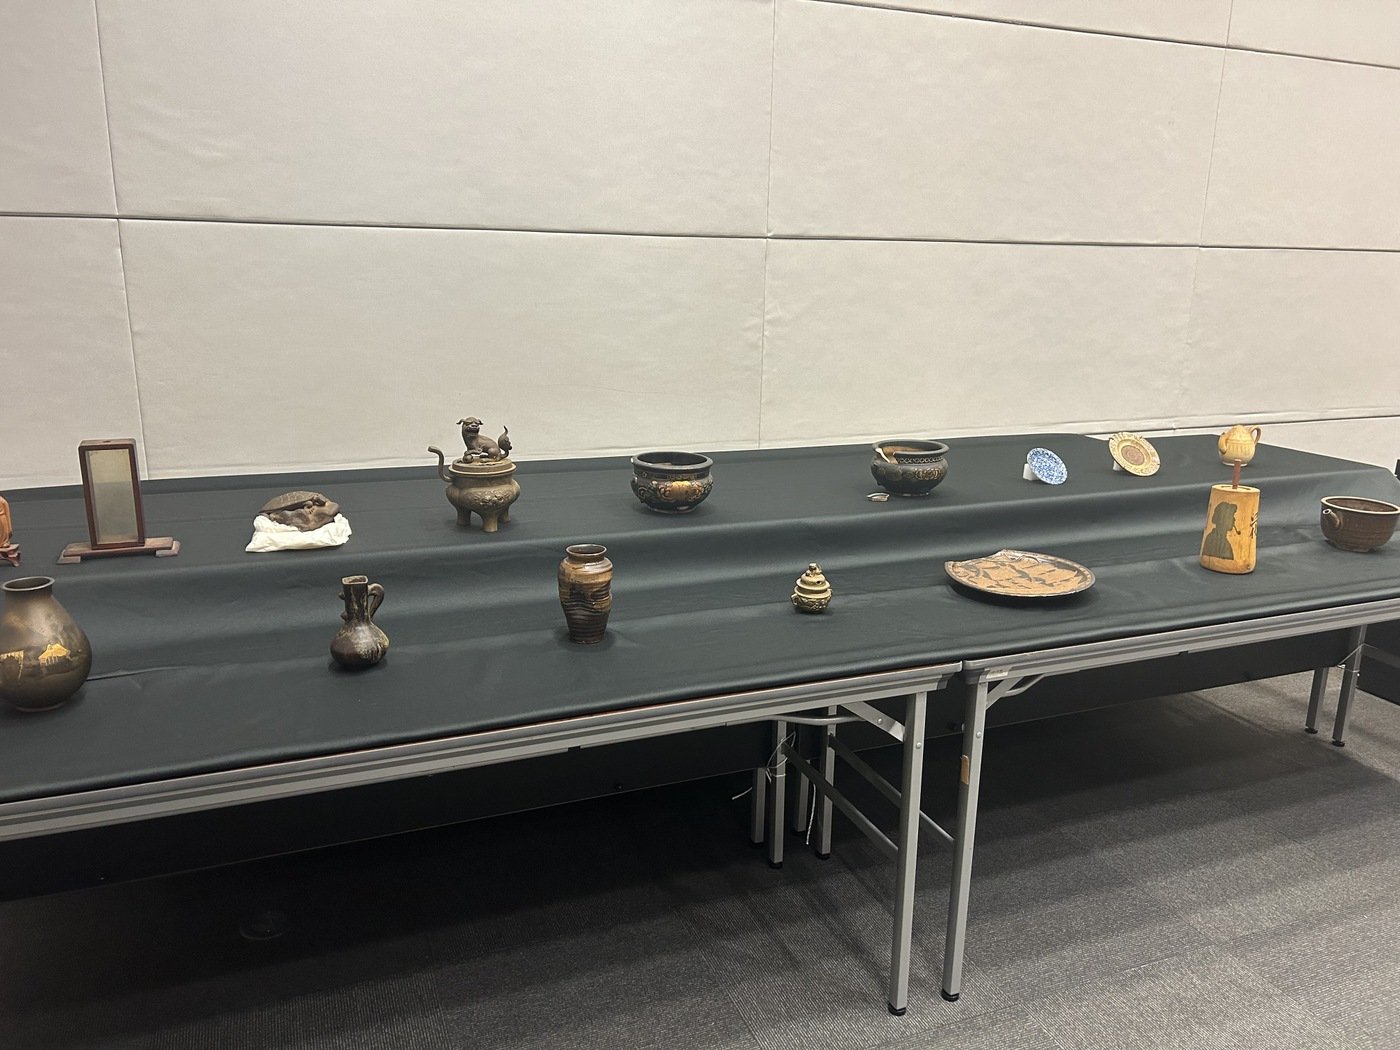 Okinawa ceramics and pottery on display.